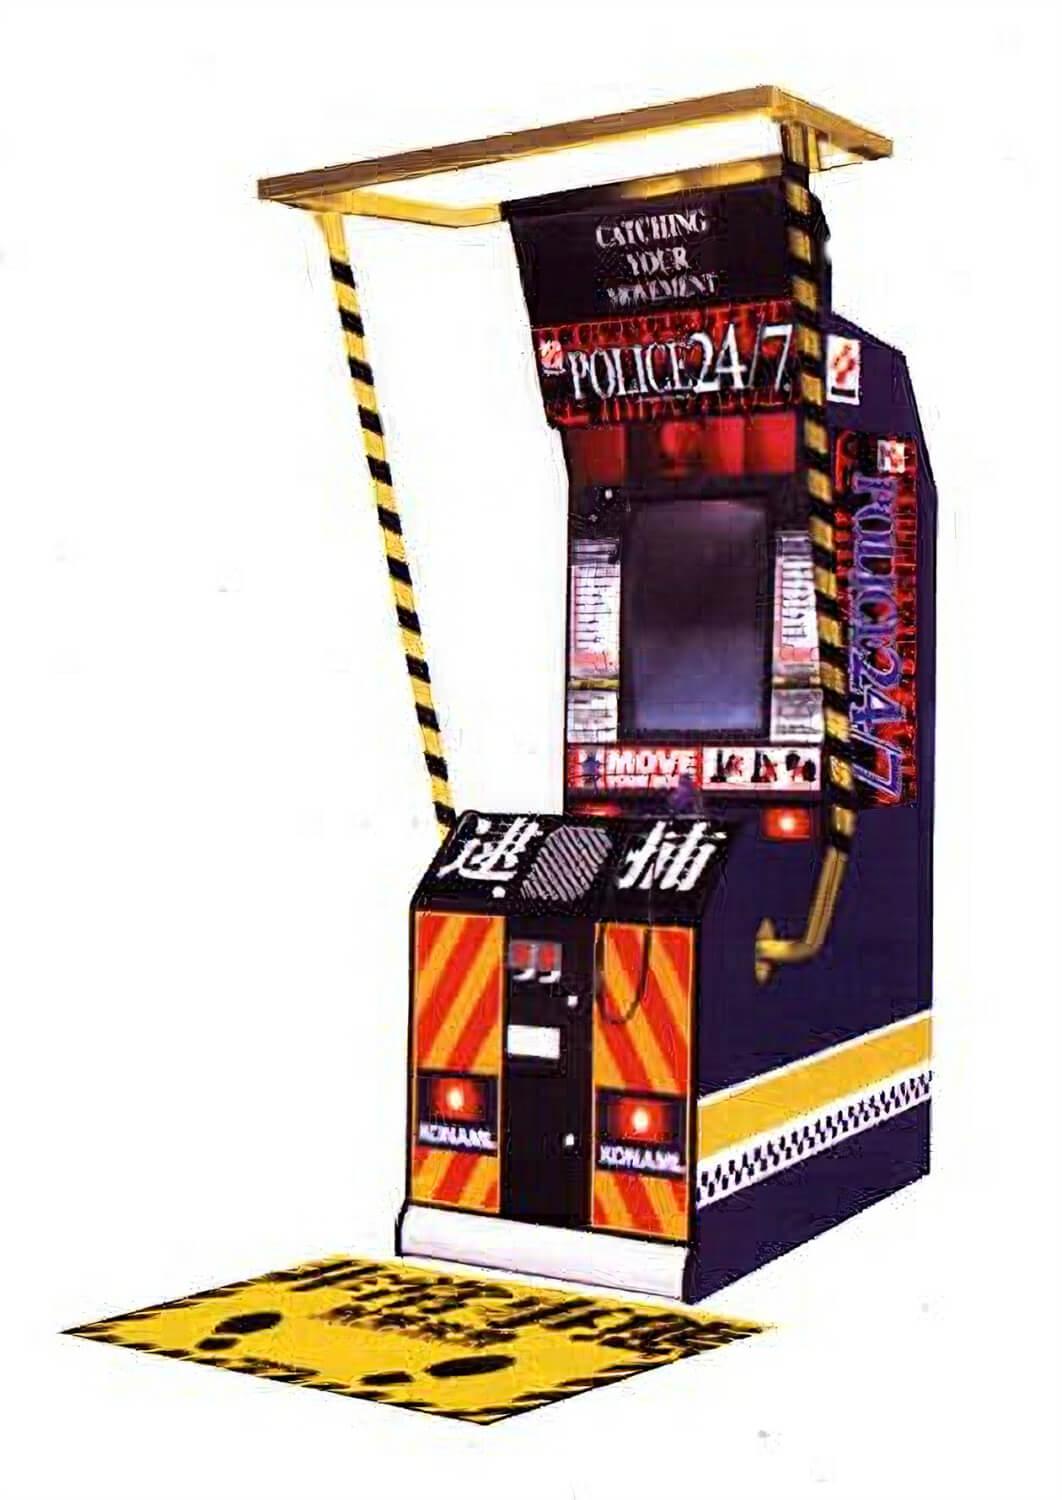 226_police-24-7-arcade-machine.jpg